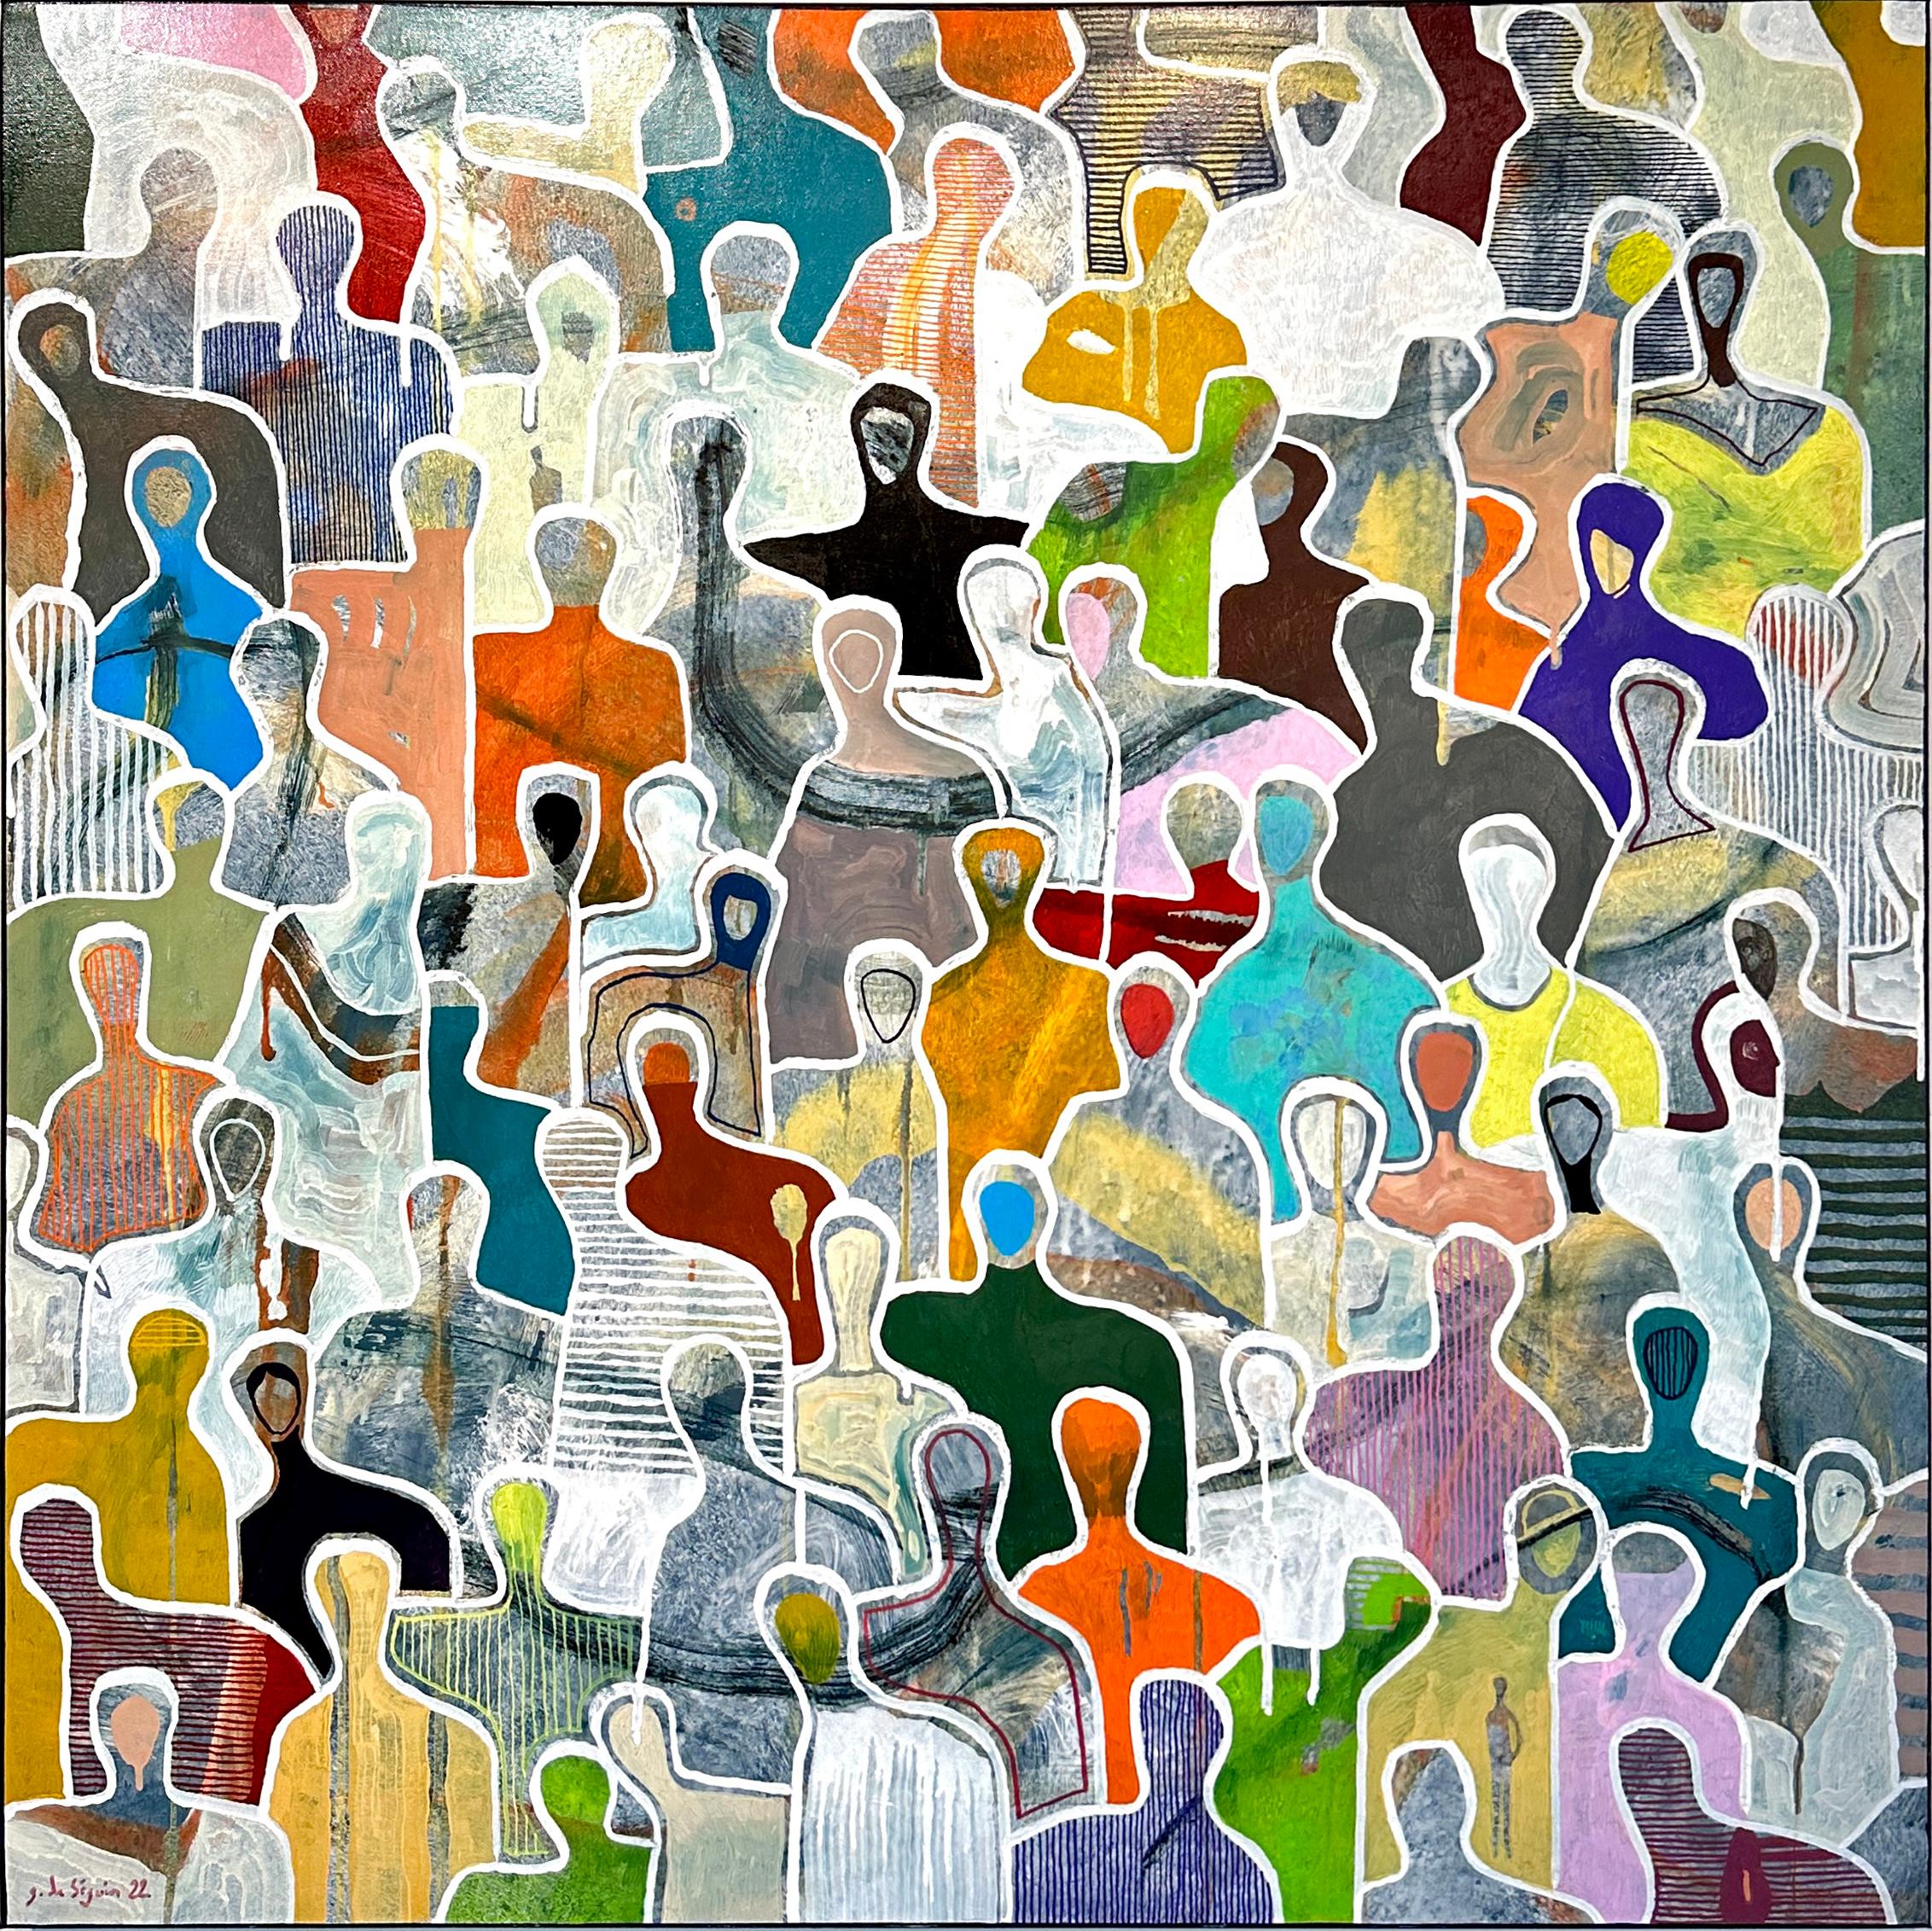 Community by Gaetan de Seguin - Figurative contemporary Painting